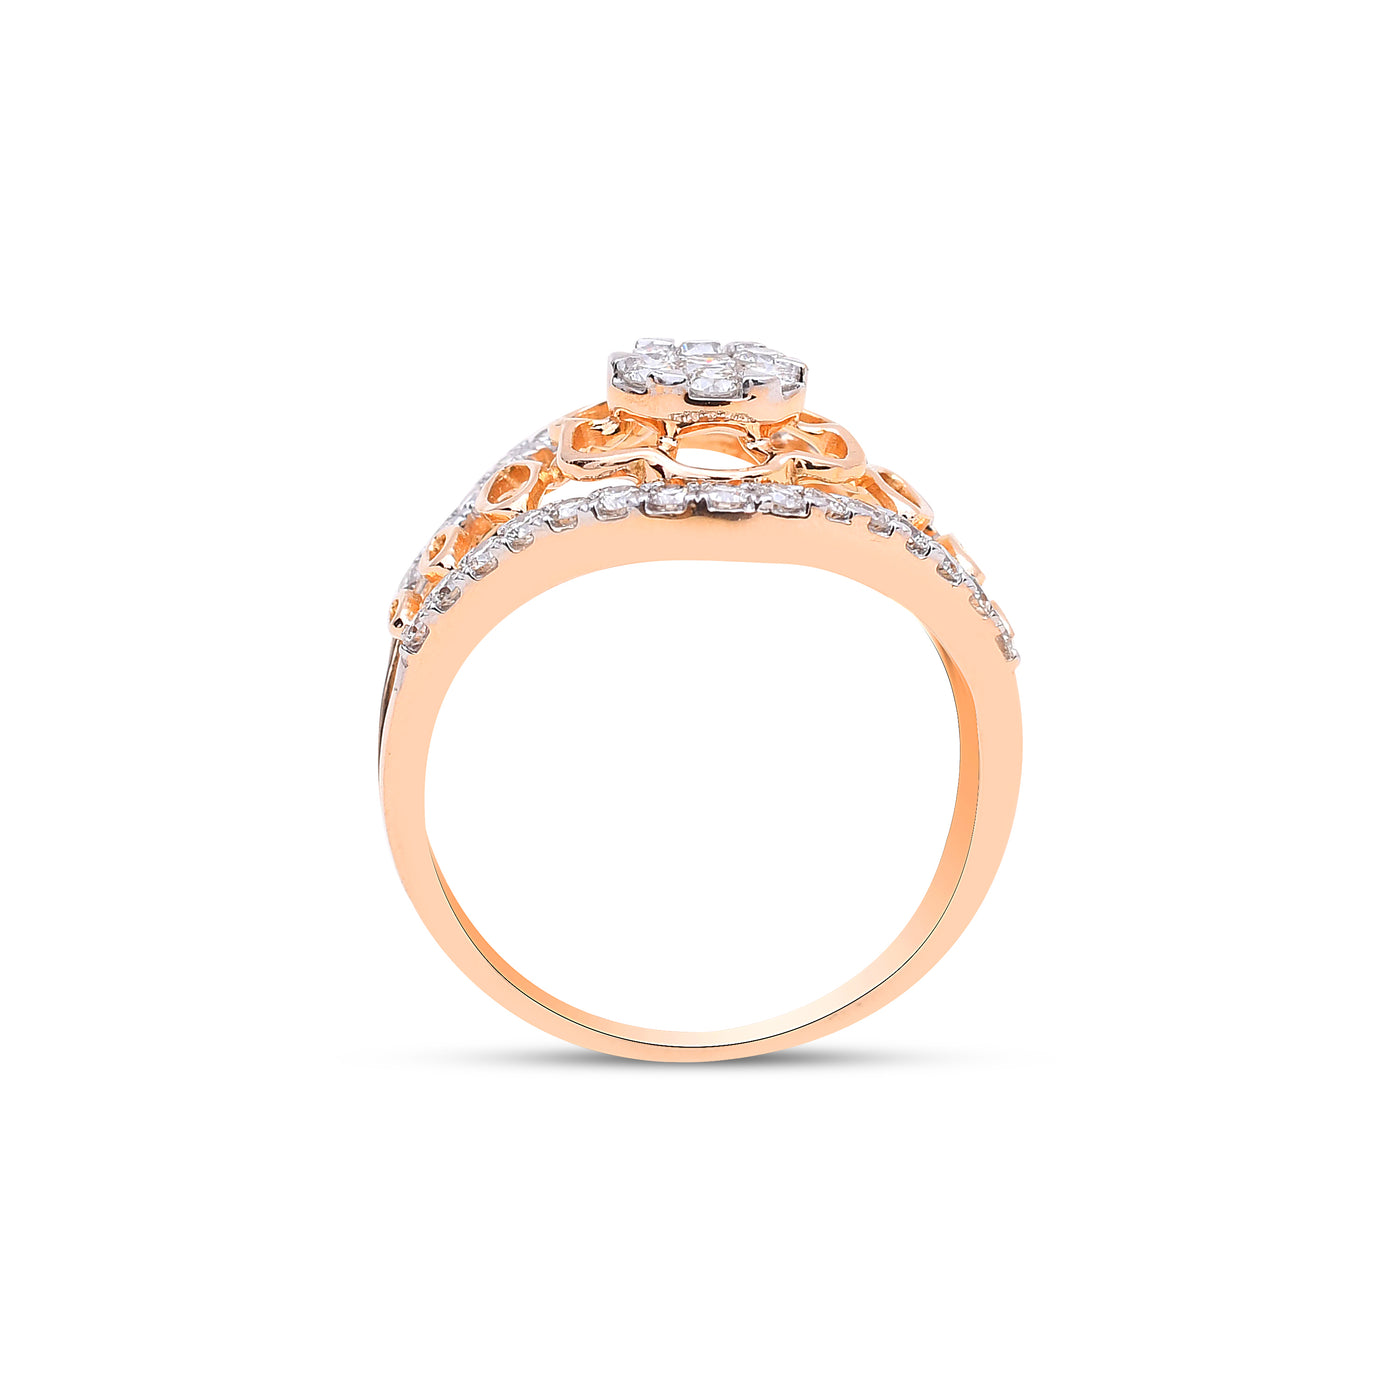 The Grace Diamond Ring